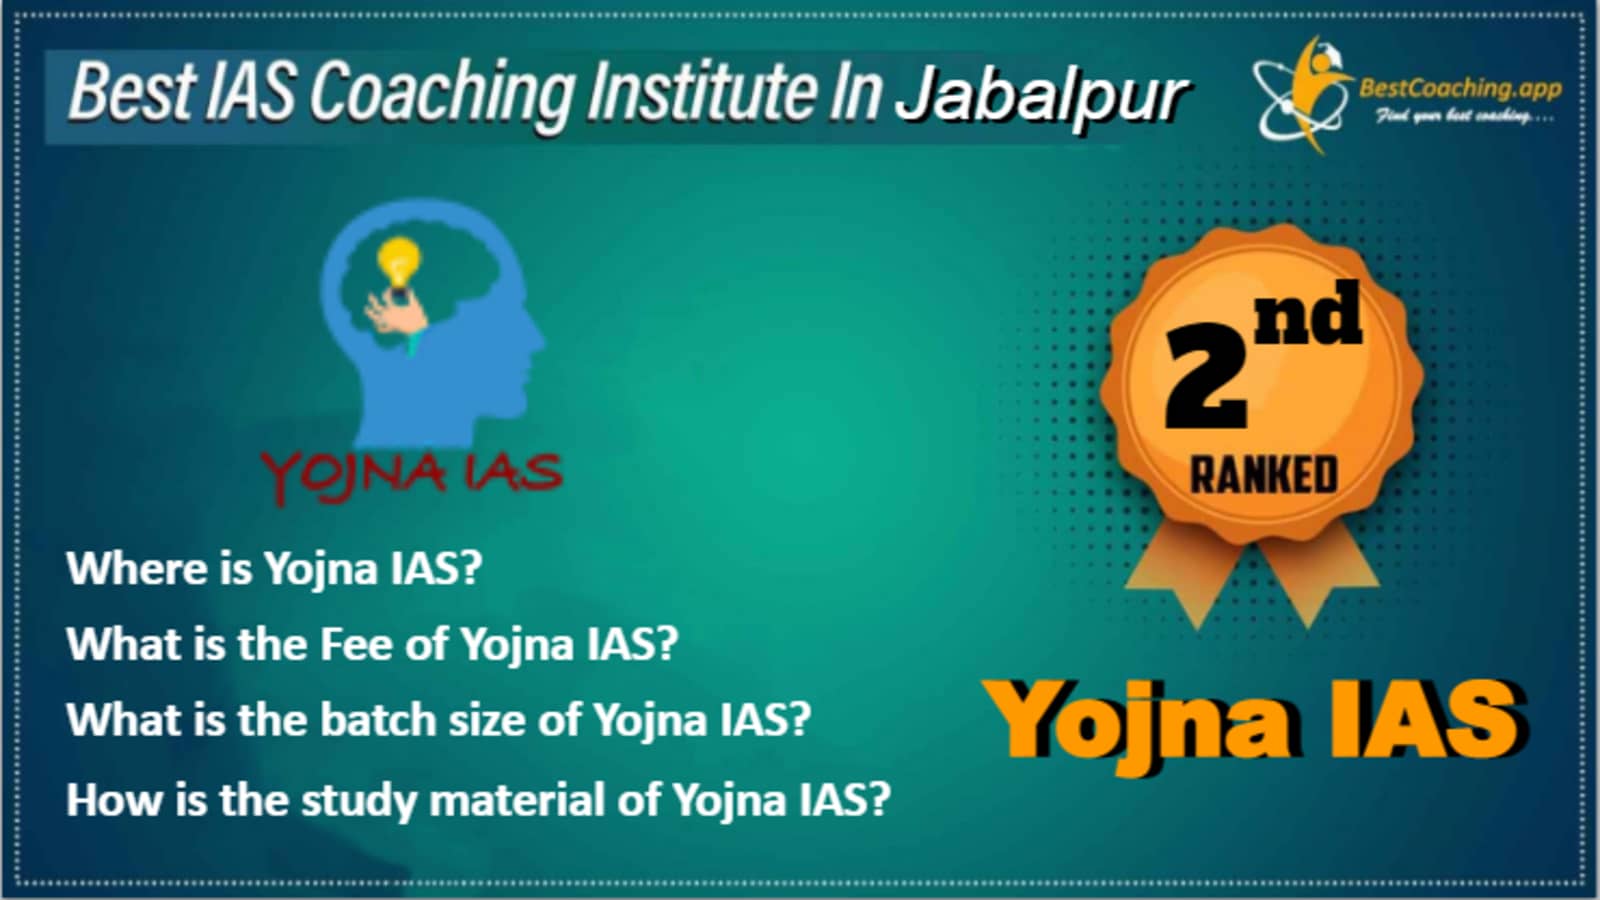 Rank 2 Best IAS Coaching in Jabalpur